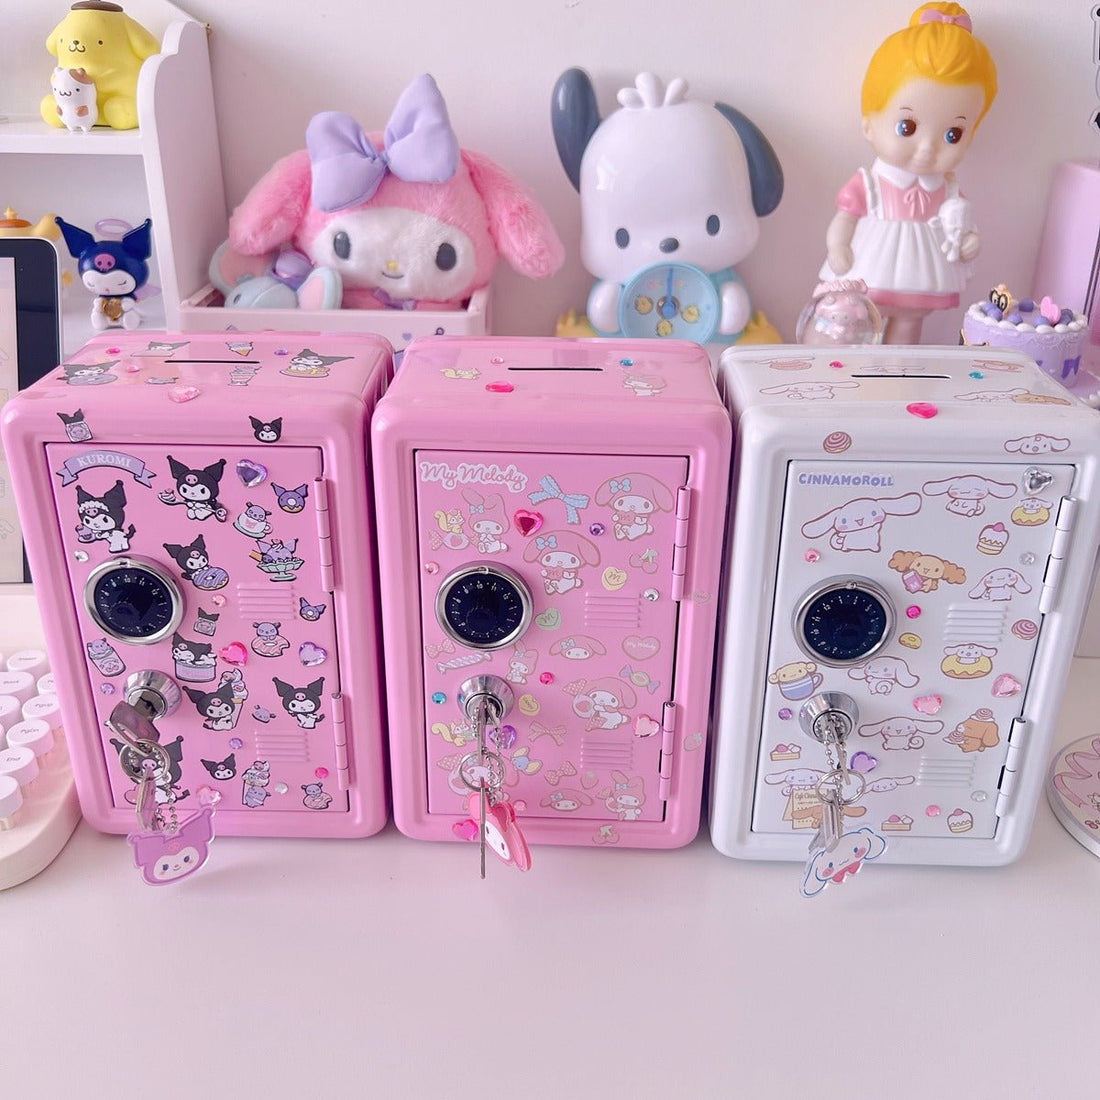 Sanrio Safe Box Desktop Organizer with Piggy Bank Functionality→ - In Kawaii Shop